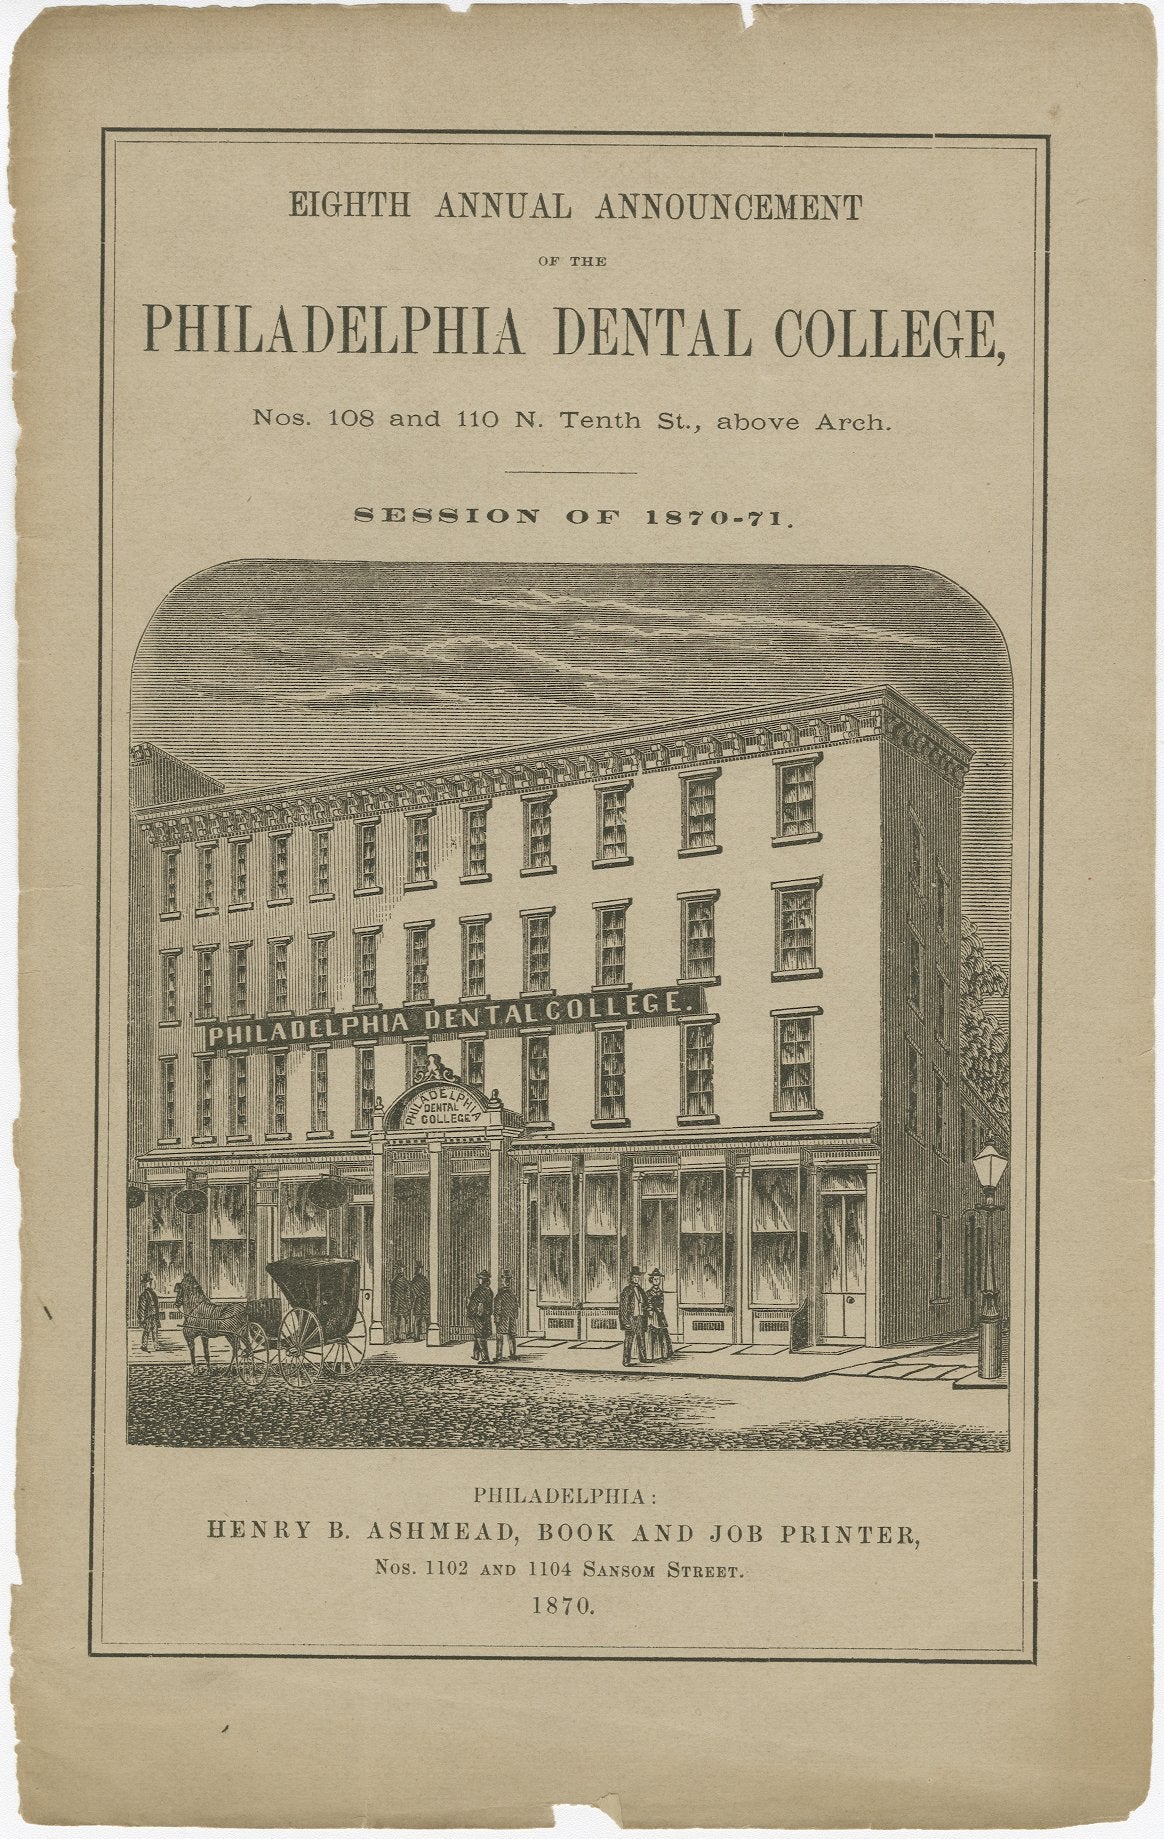 Philadelphia Dental College Eighth Annual Announcement, 1870